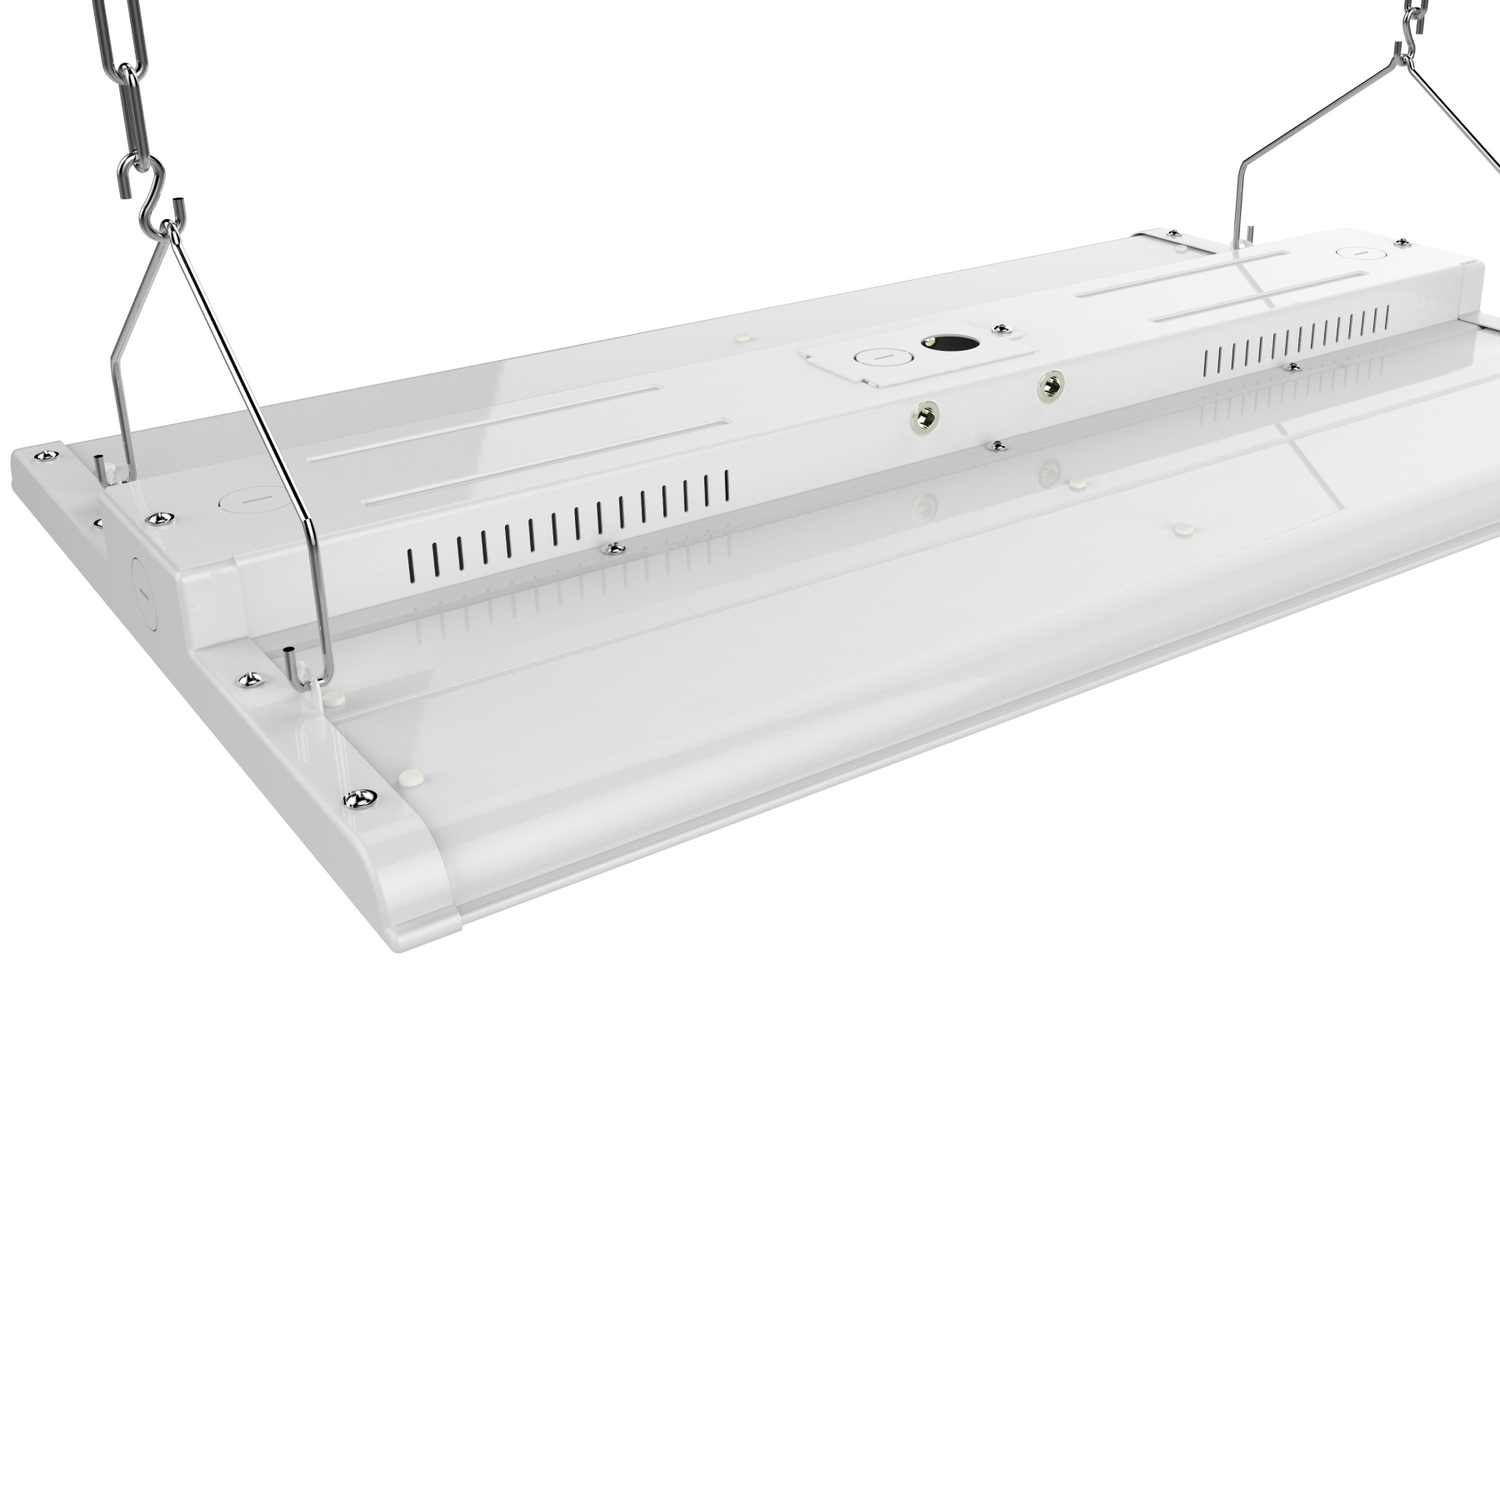 2FT LED Linear High Bay Light 165W - 5000K - 23100Lumens 0-10V Dimmable 120-277VAC, White